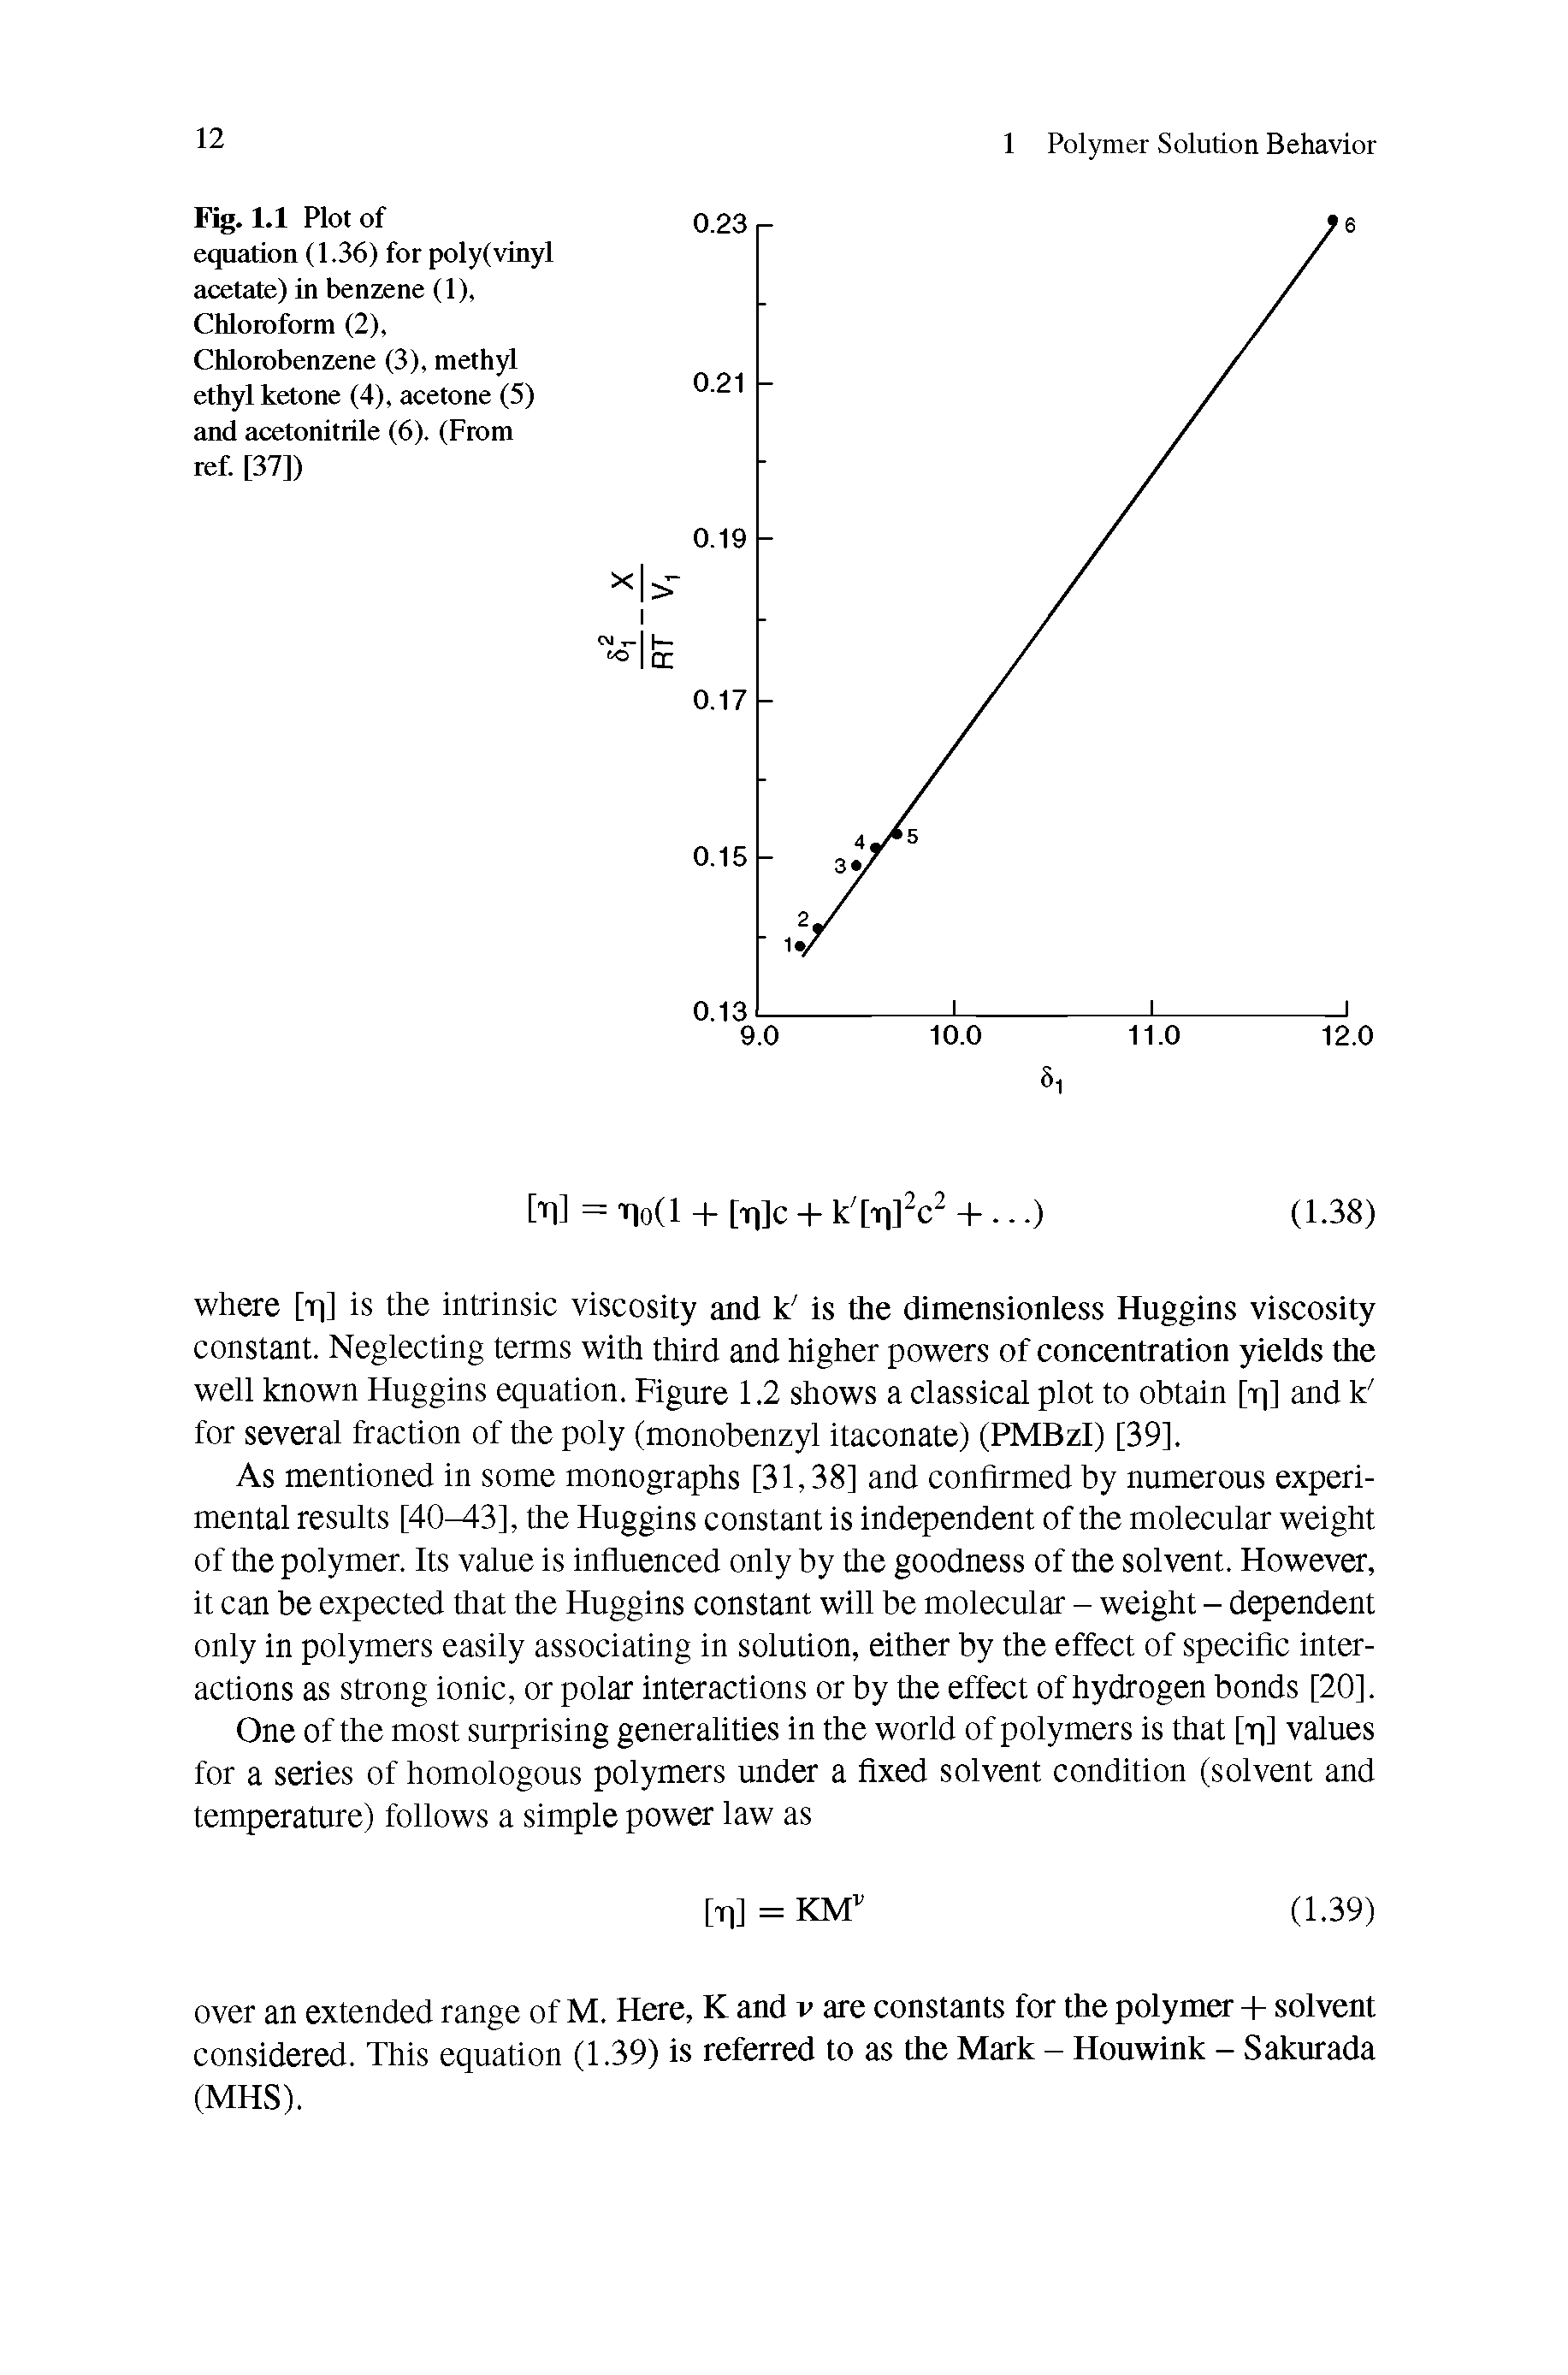 Fig. 1.1 Plot of equation (1.36) for poly(vinyl acetate) in benzene (1), Chloroform (2), Chlorobenzene (3), methyl ethyl ketone (4), acetone (5) and acetonitrile (6). (From ref. [37])...